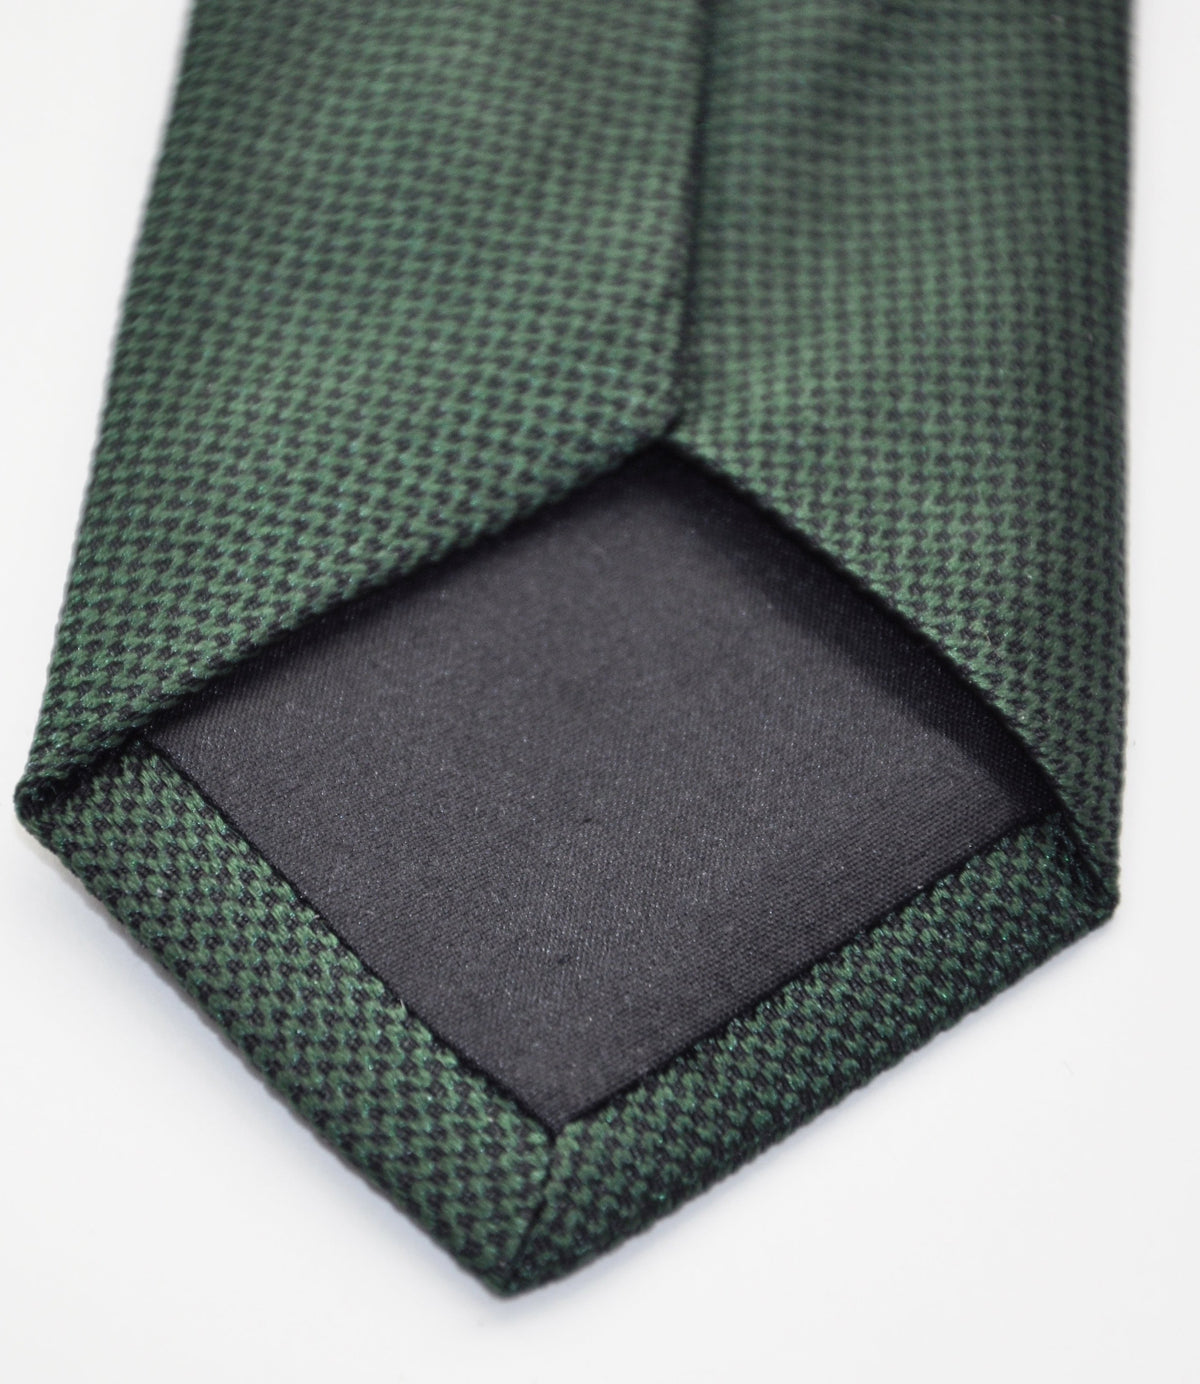 carpasus sustainable organic silk tie dark green. Carpasus nachhaltige Krawatte Bio Seide in Dunkelgrün